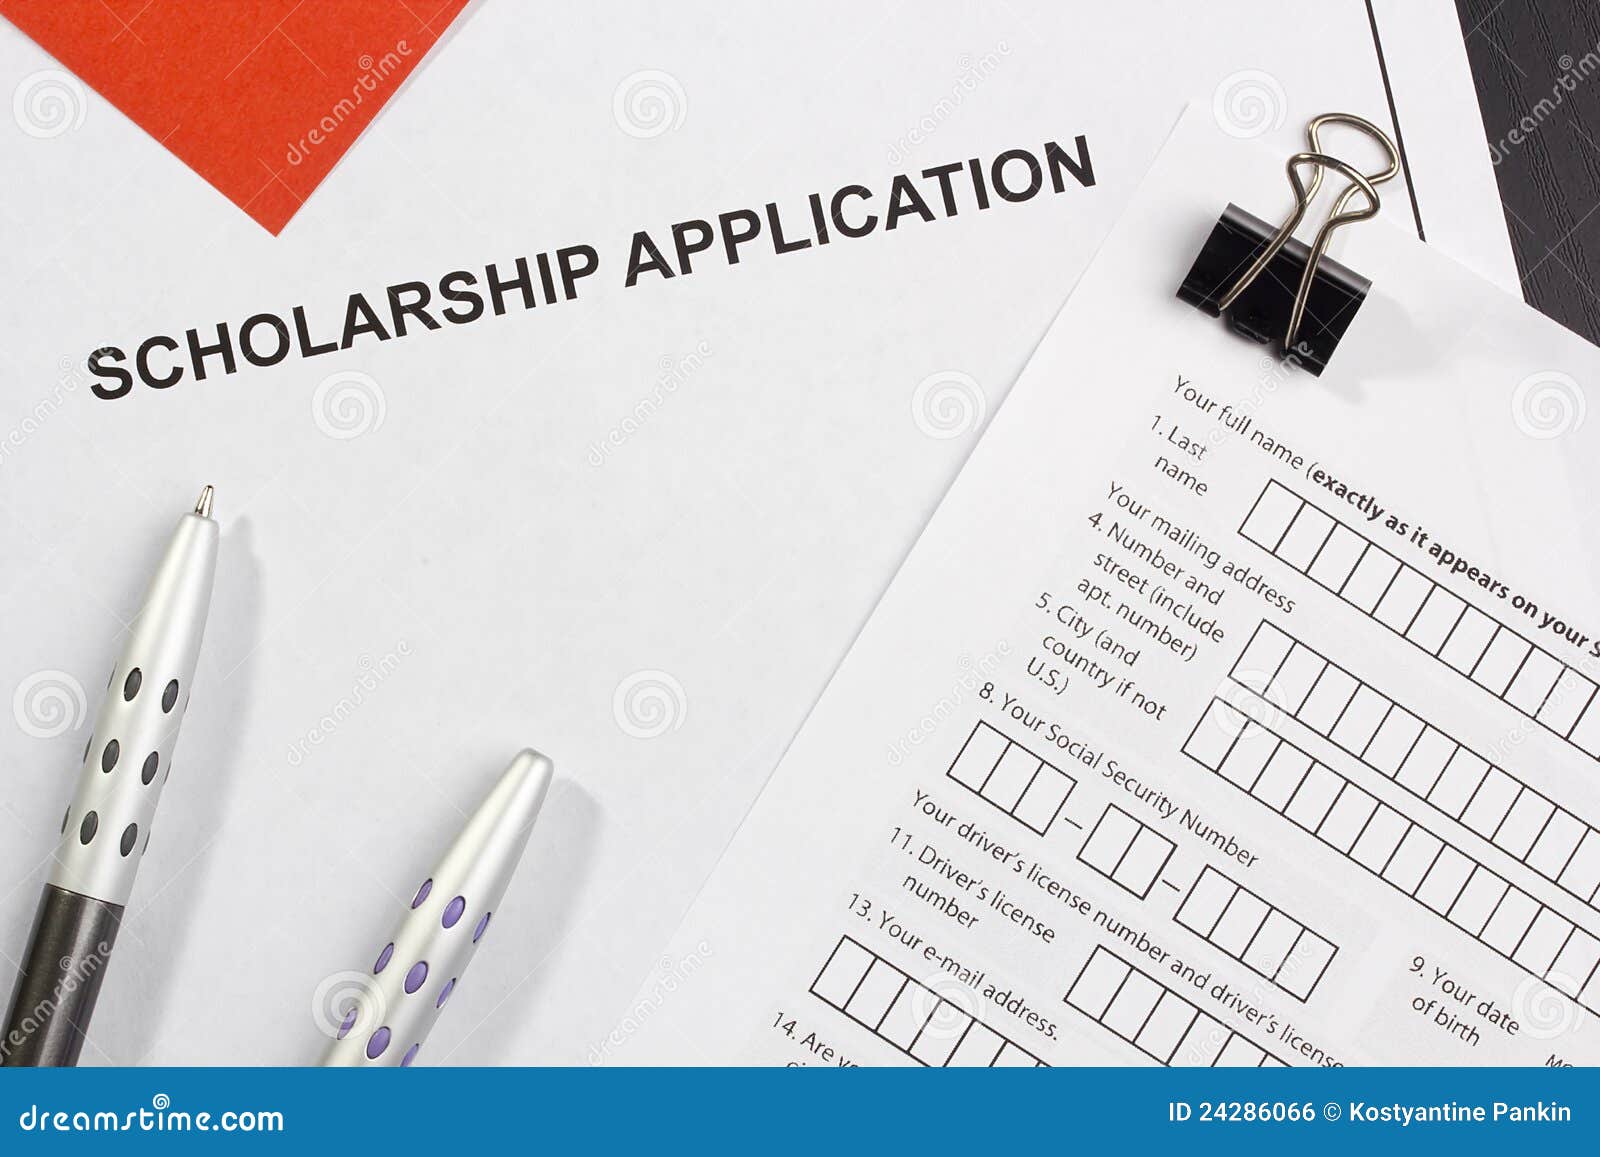 Scholarship Application Royalty Free Stock Image - Image: 24286066